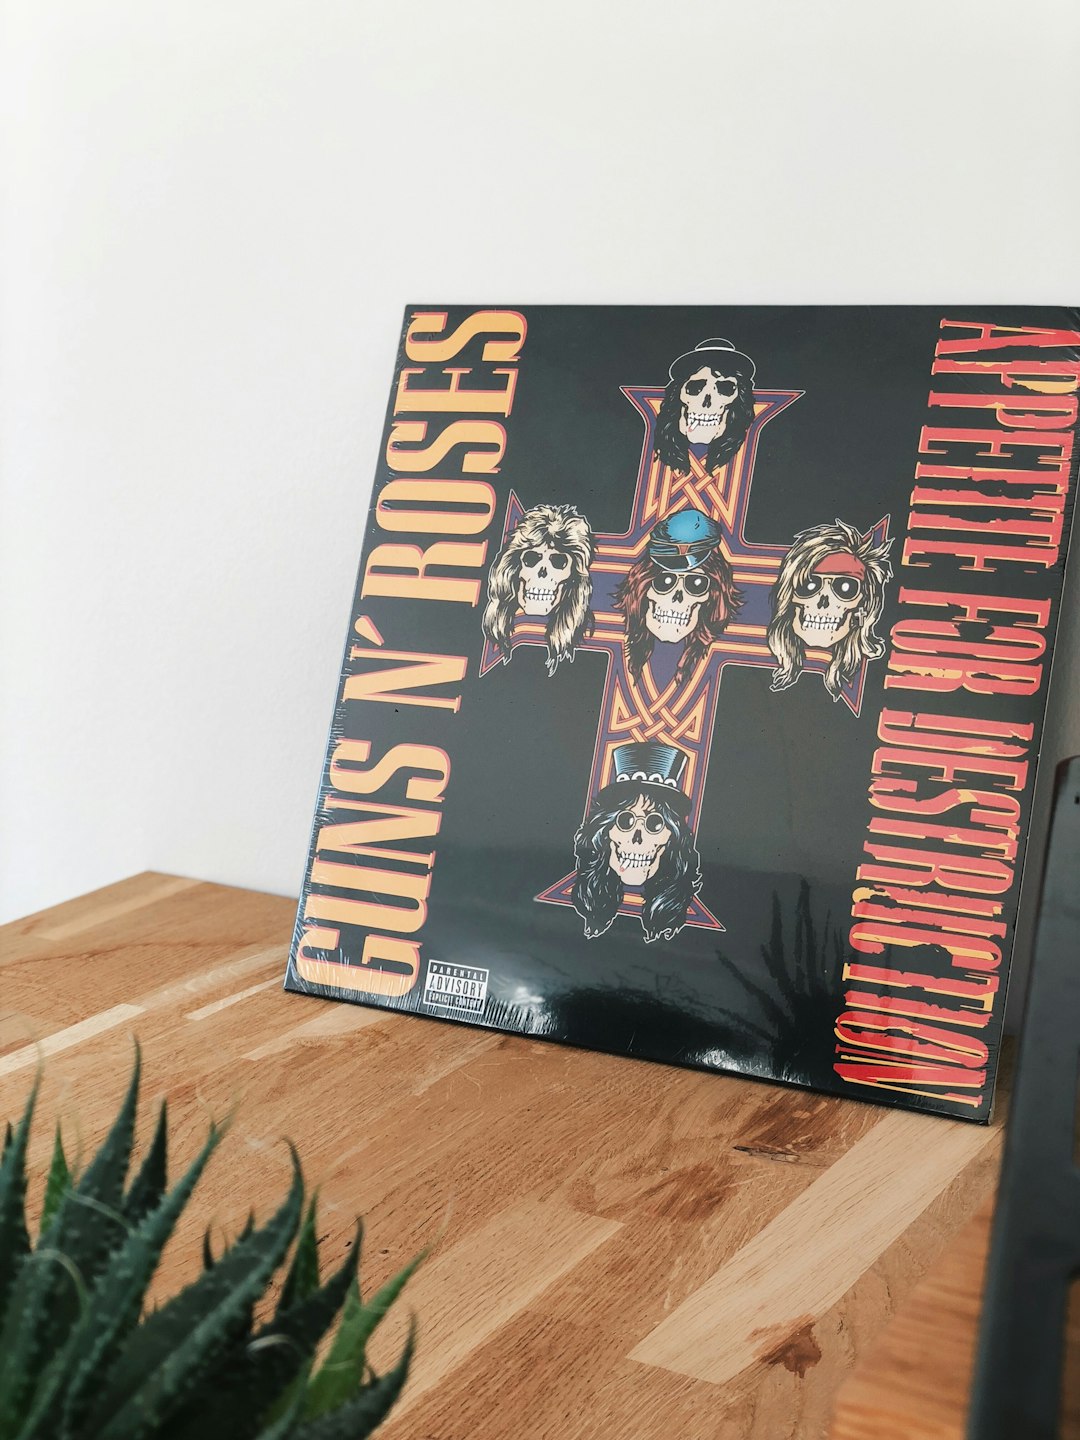 Guns N' Roses album